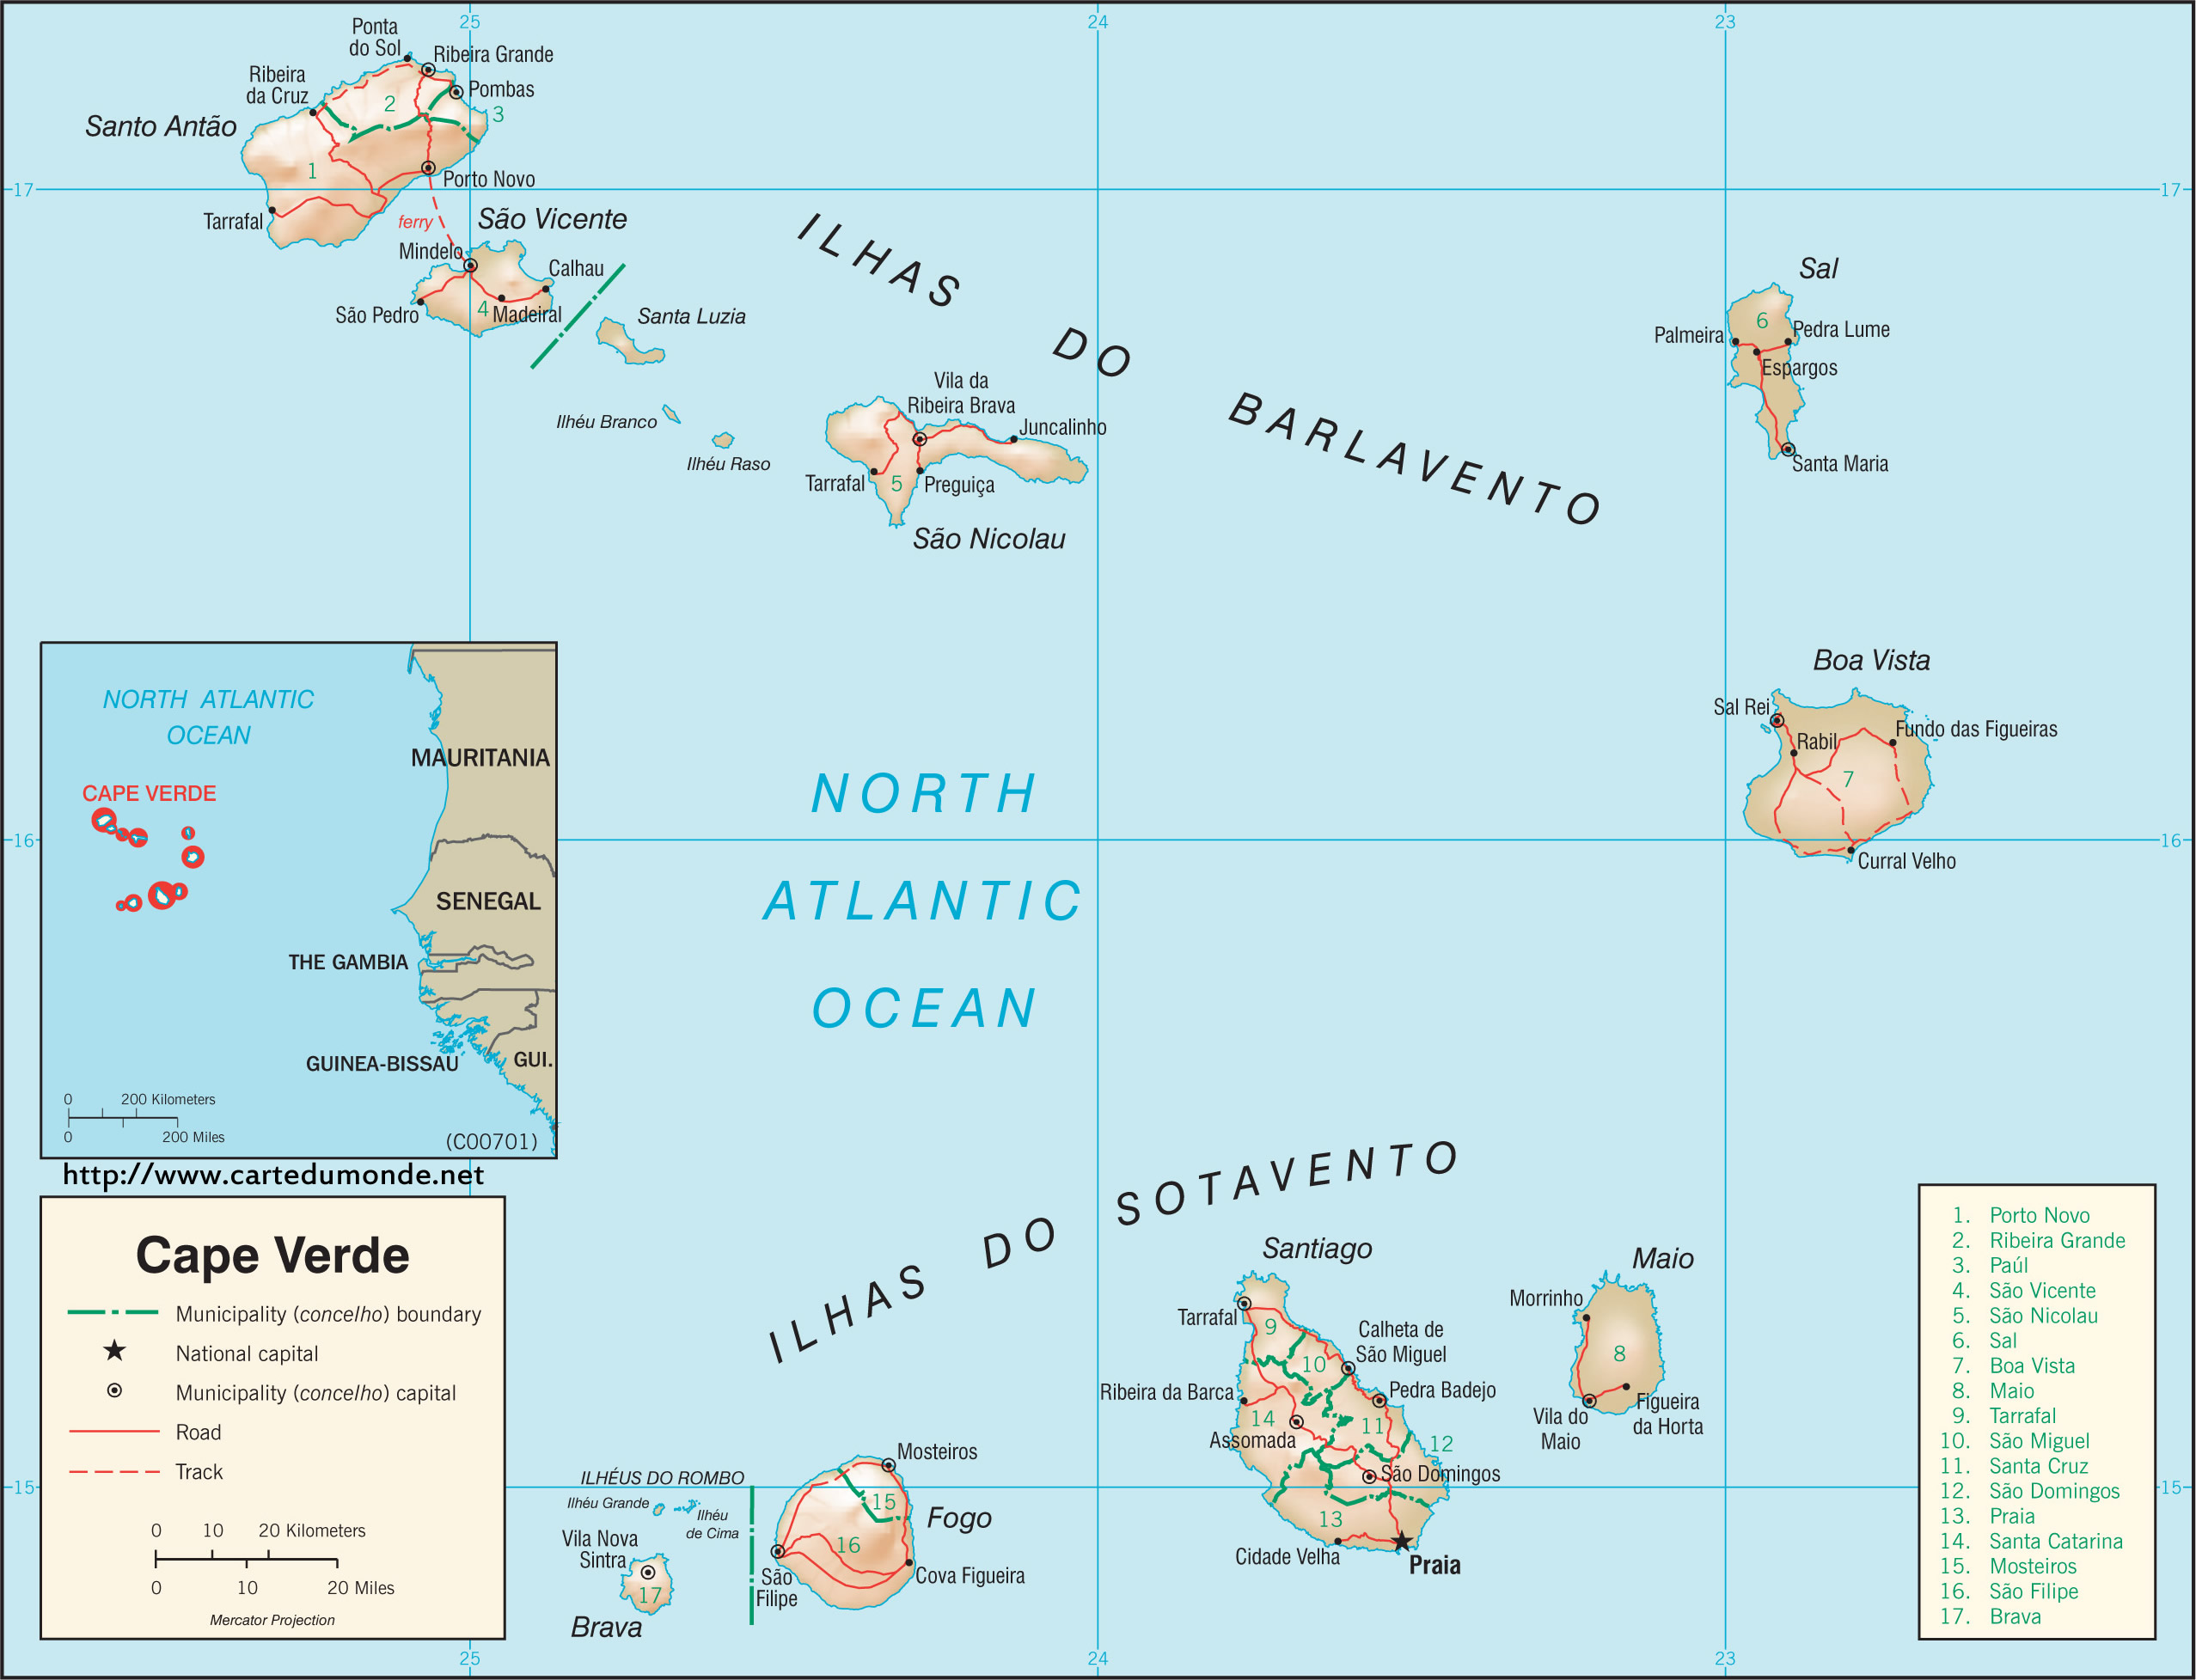 Agrandar el mapa Cabo Verde